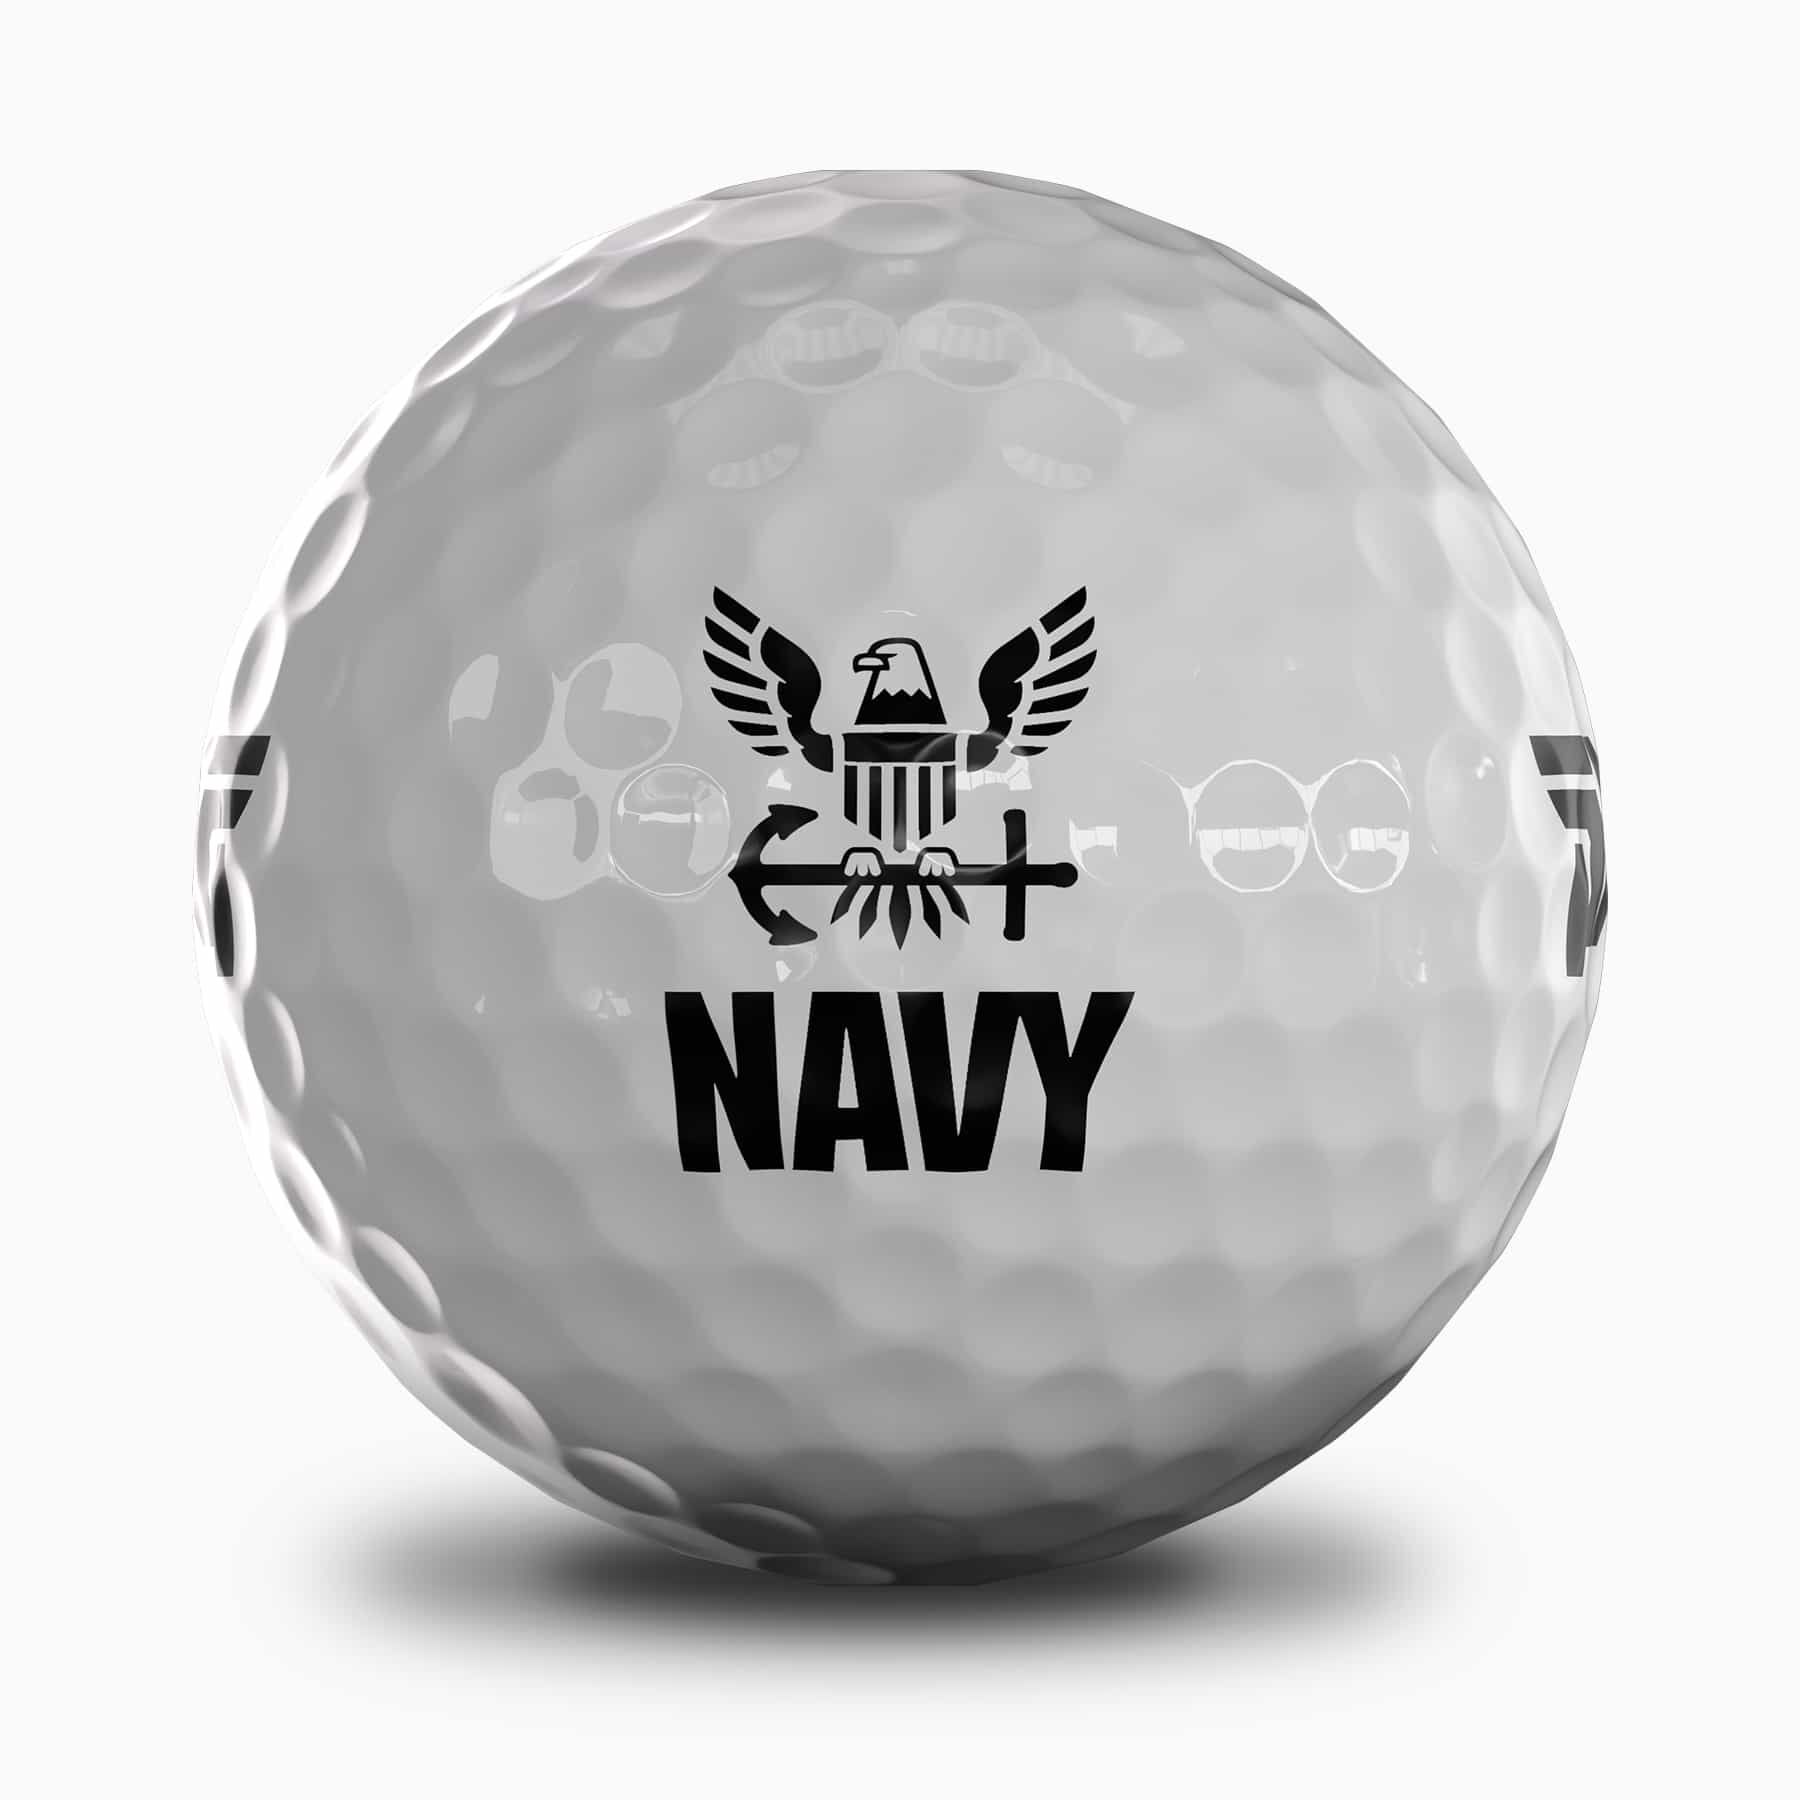 NEW PXG Xtreme Premium Golf Balls Navy Edition